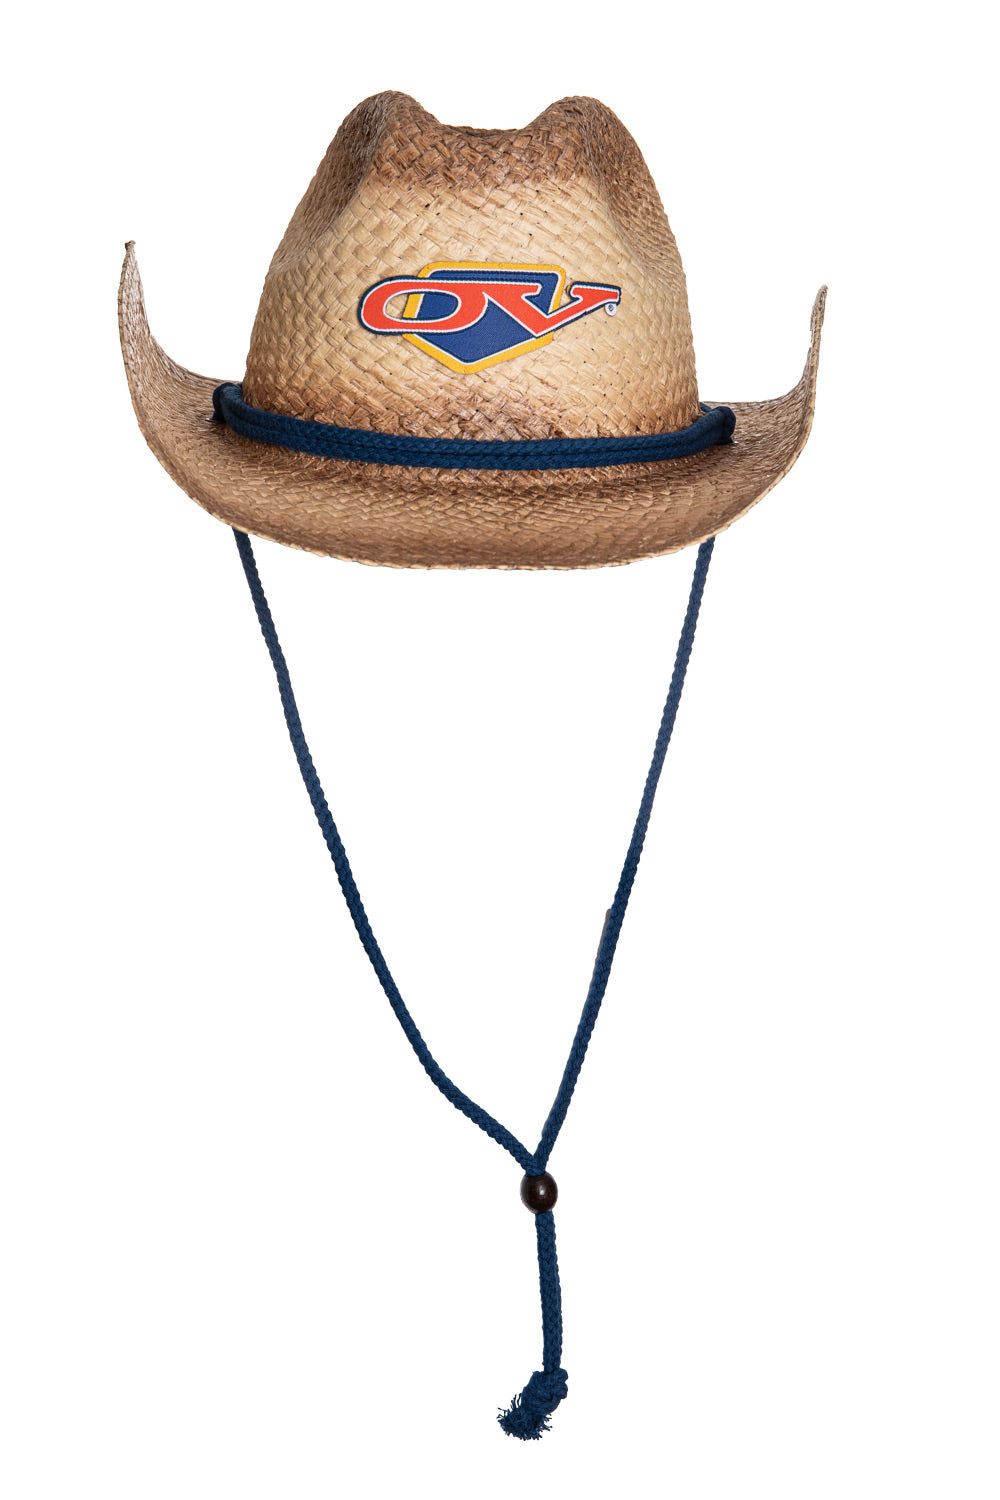 Molson Old Vienna (OV) Straw Cowboy Hat